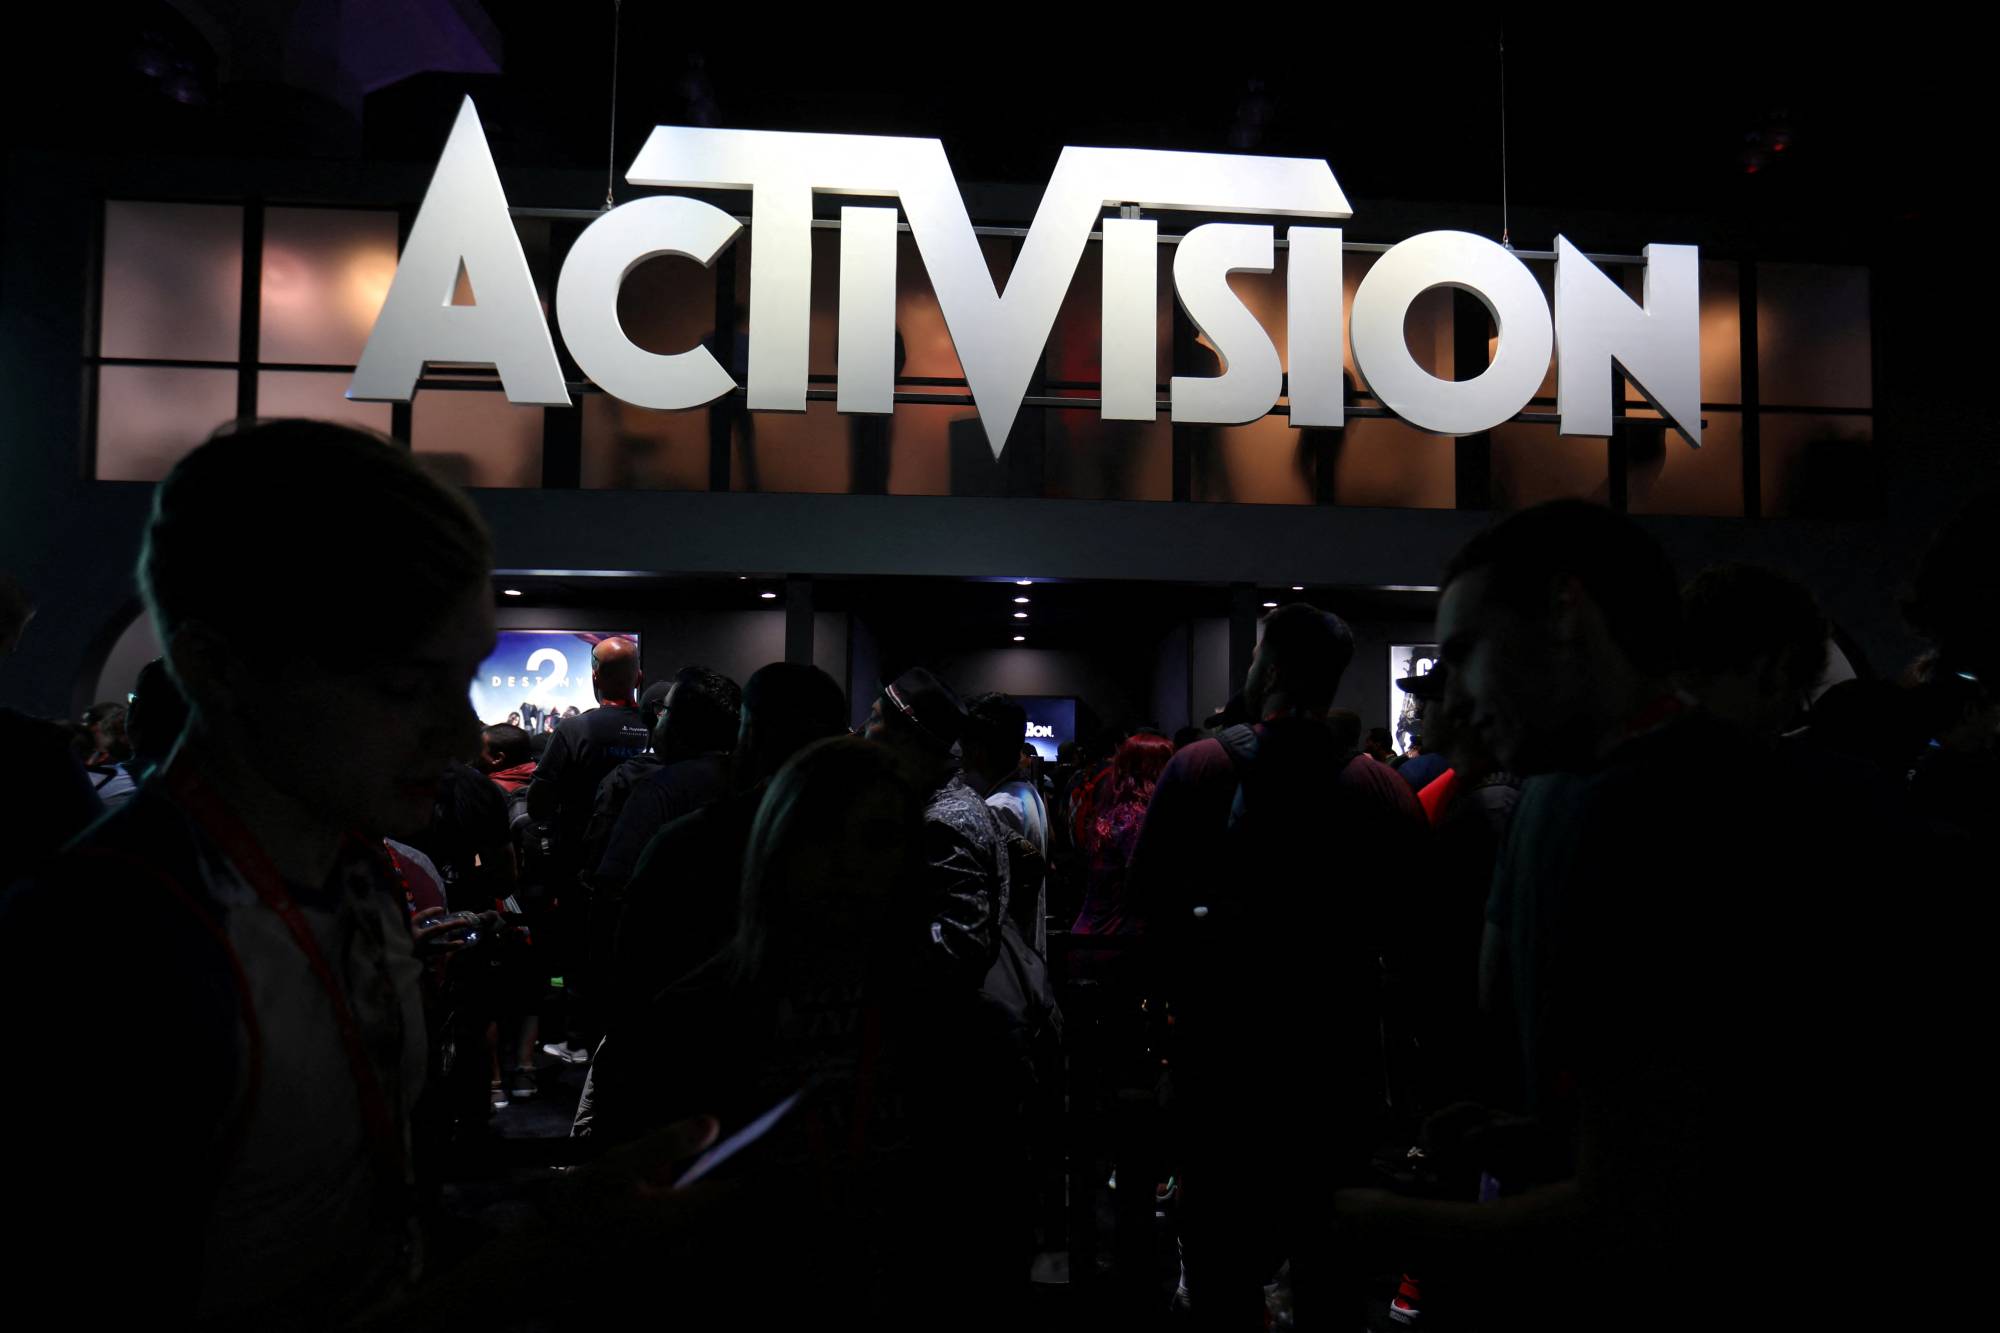 Microsoft's Activision Bizzard Acquisition: Execs Discuss